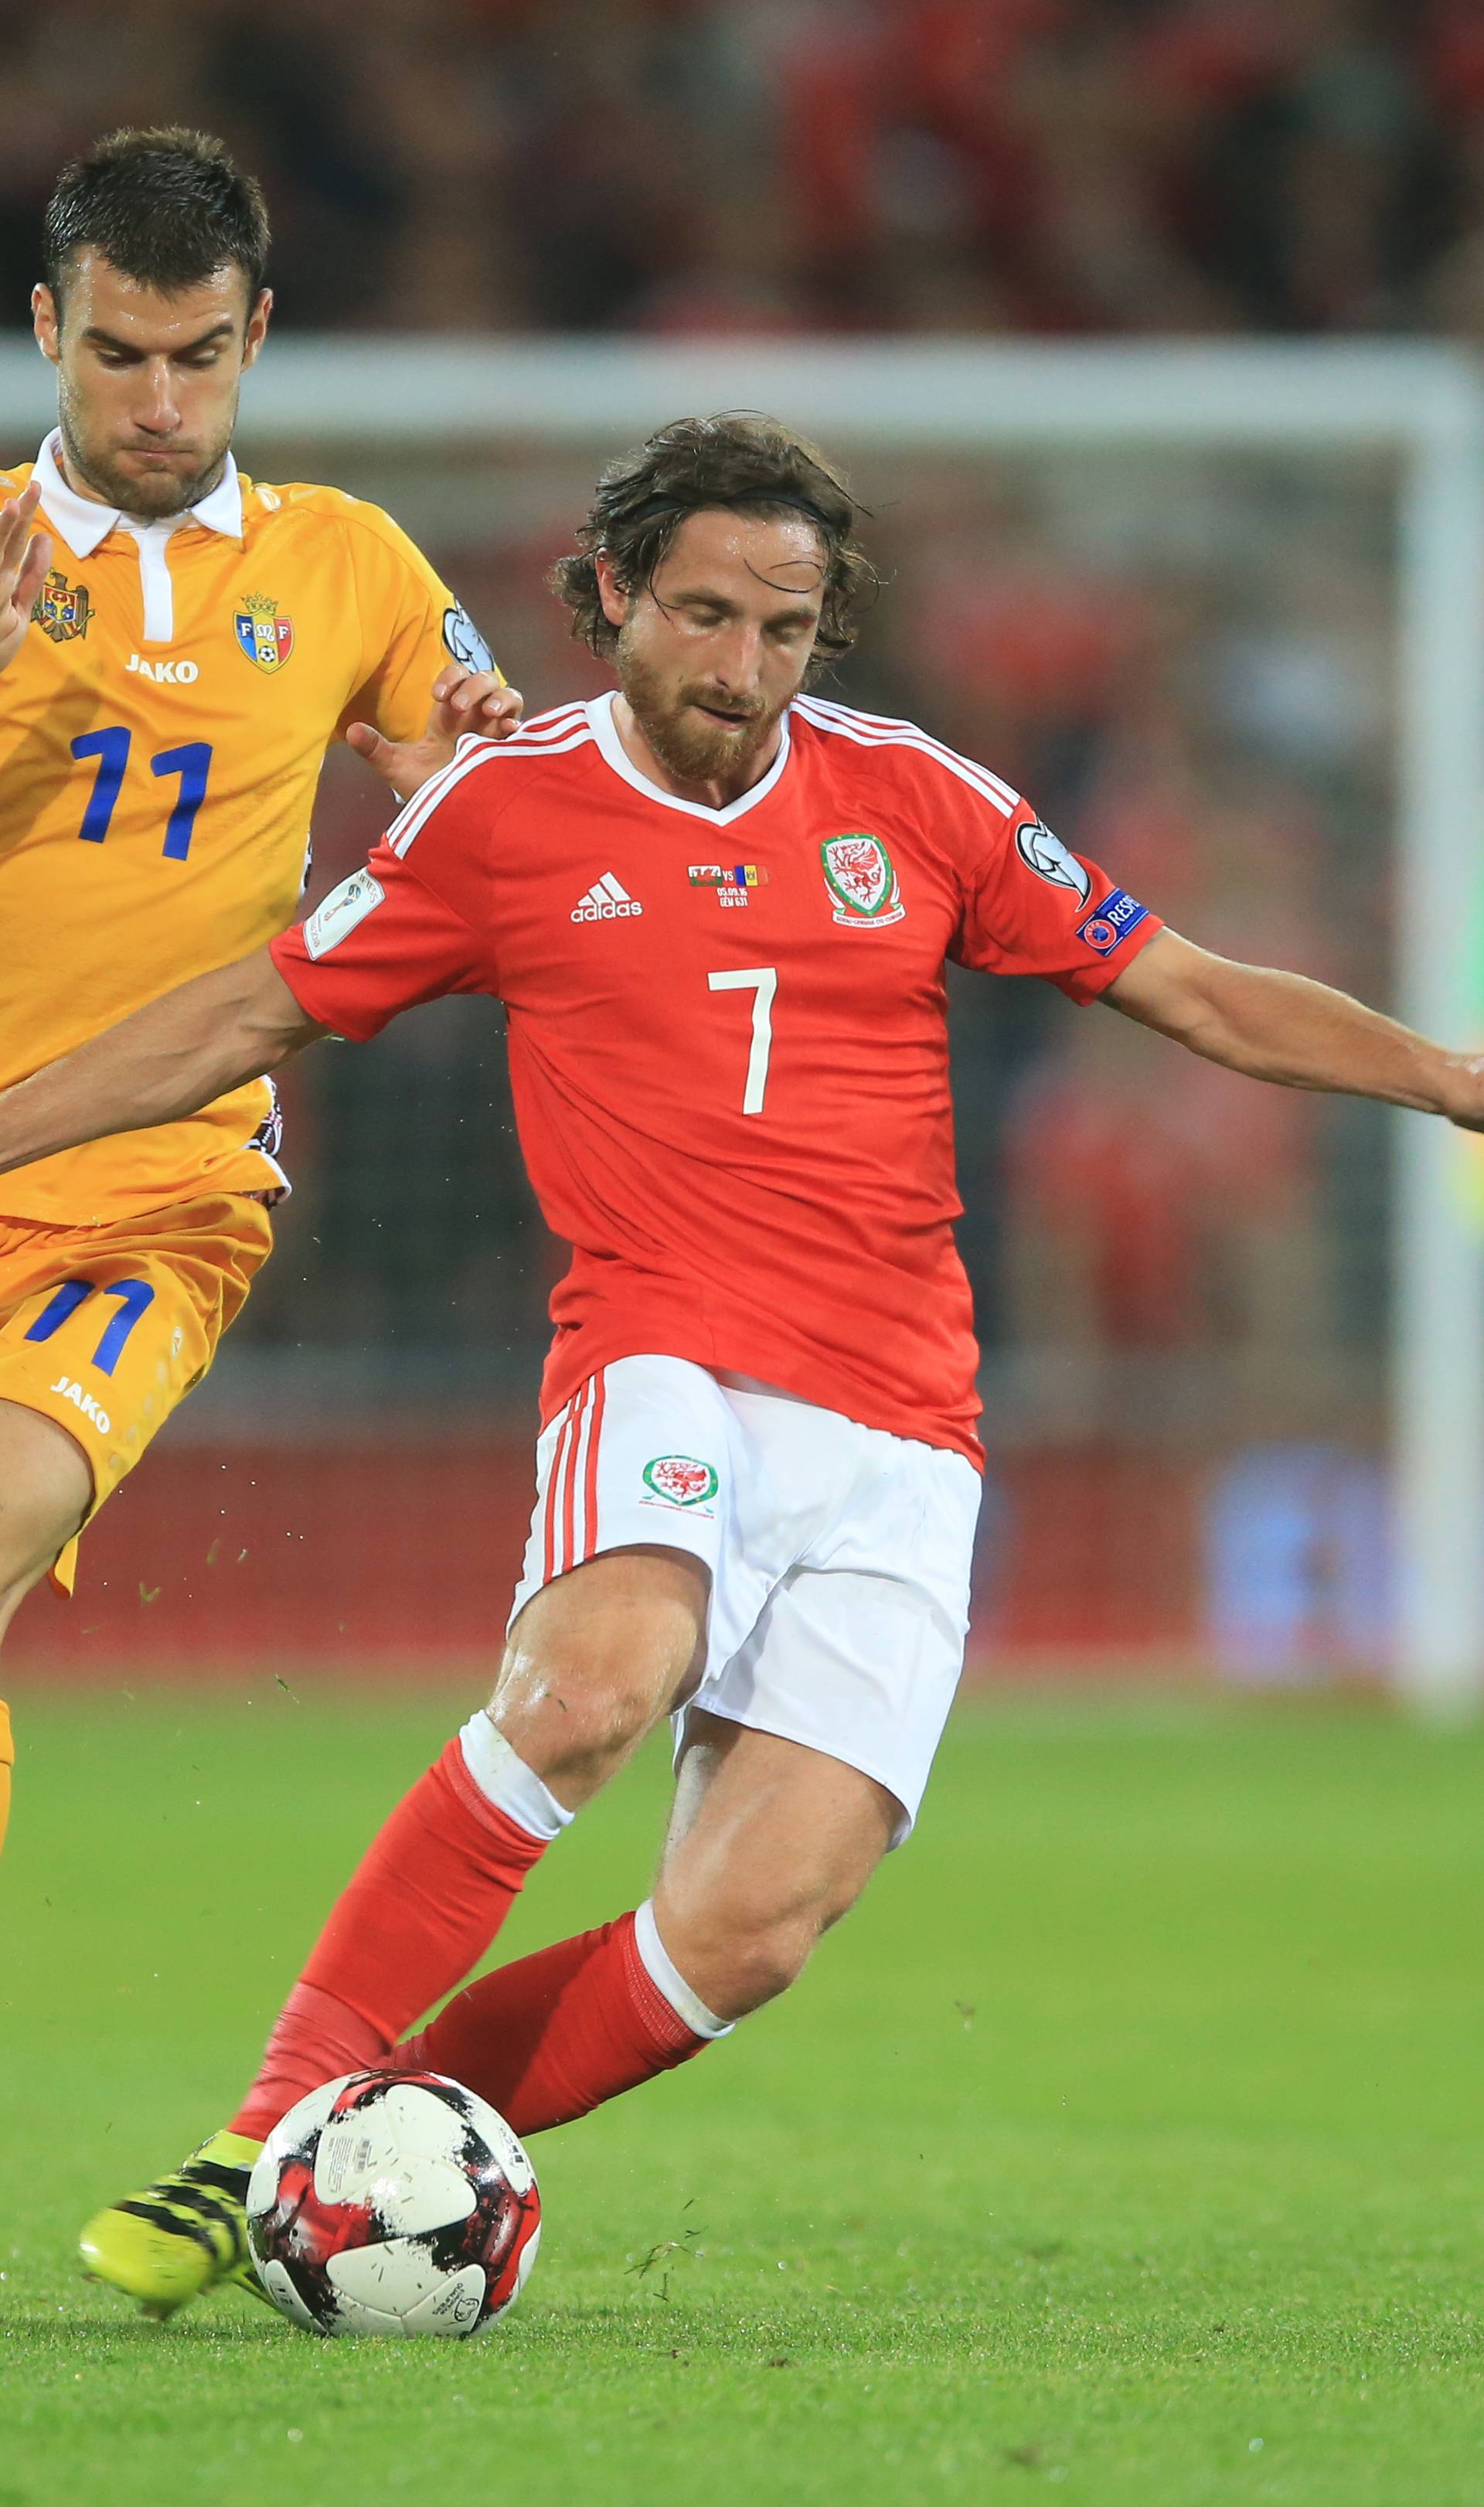 Wales v Moldova - 2018 FIFA World Cup Qualifying - Group D - Cardiff City Stadium